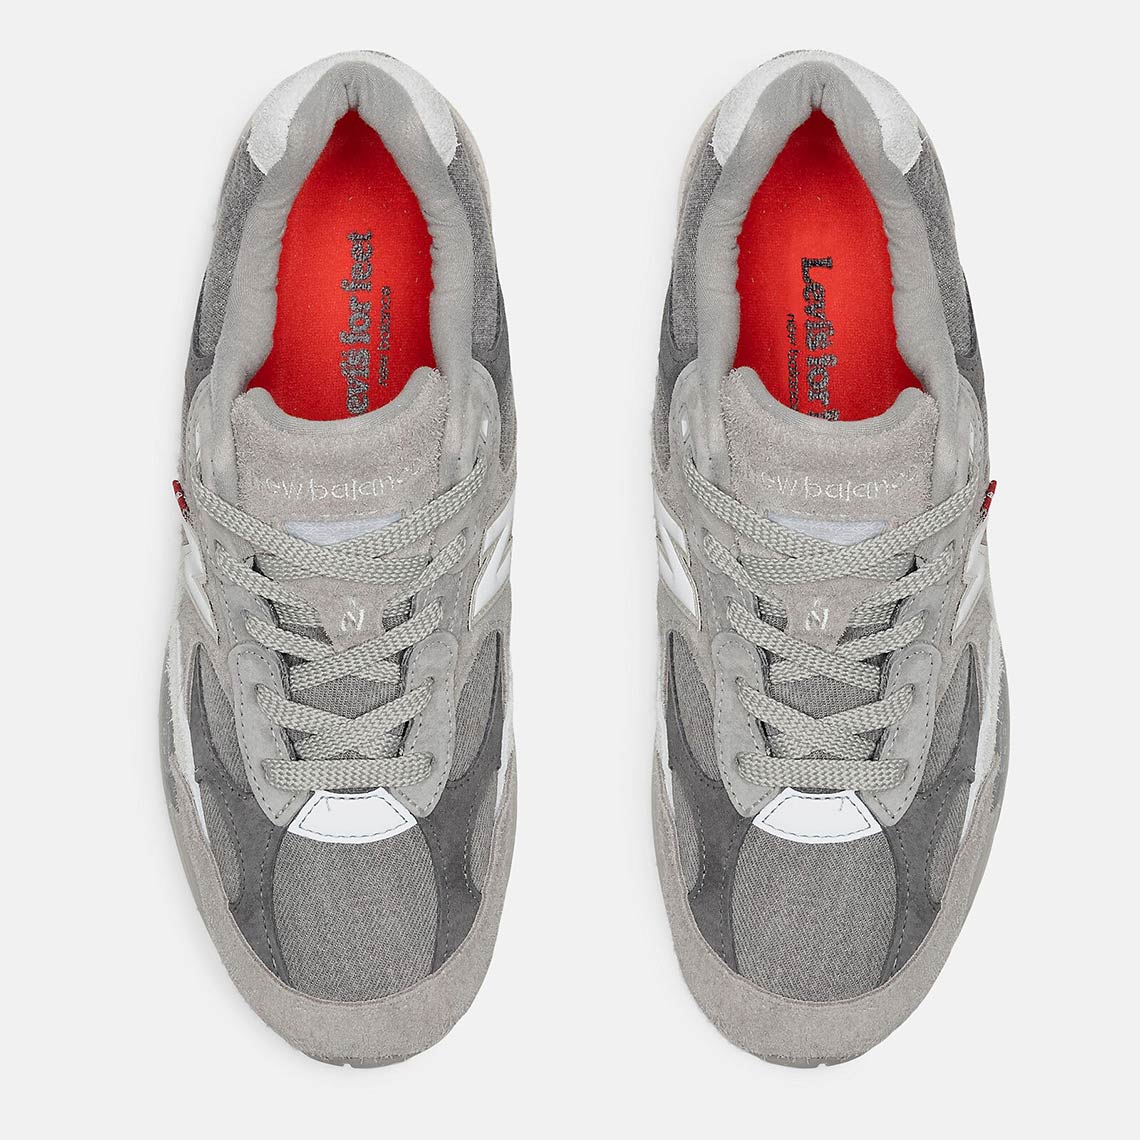 Levi's New Balance 992 m992lv Release Info | SneakerNews.com